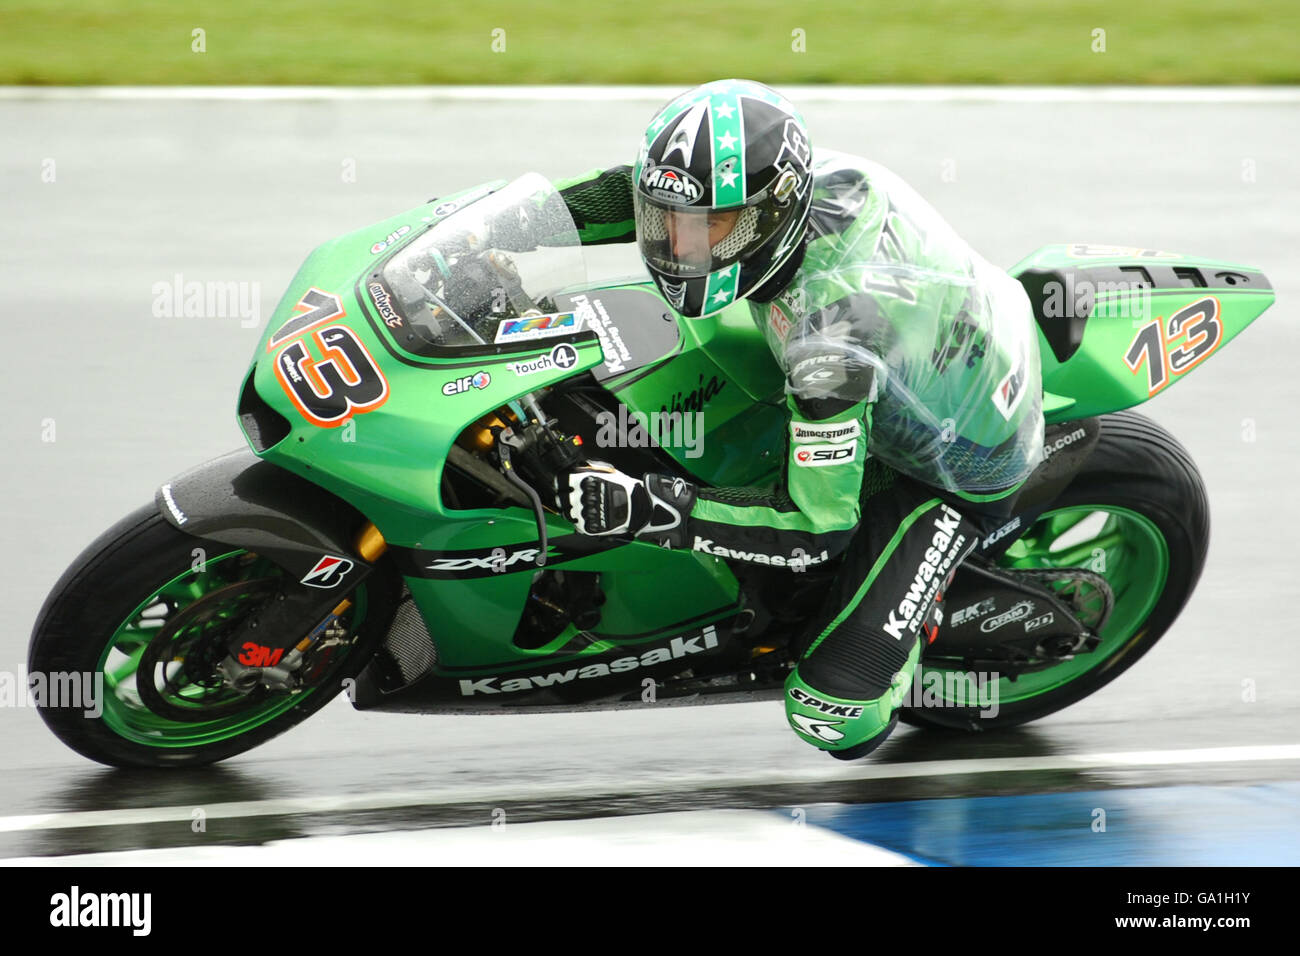 Motorcycling - British Grand Prix - Moto GP - Race - Donington Park. Anthony West, Kawasski Racing Stock Photo